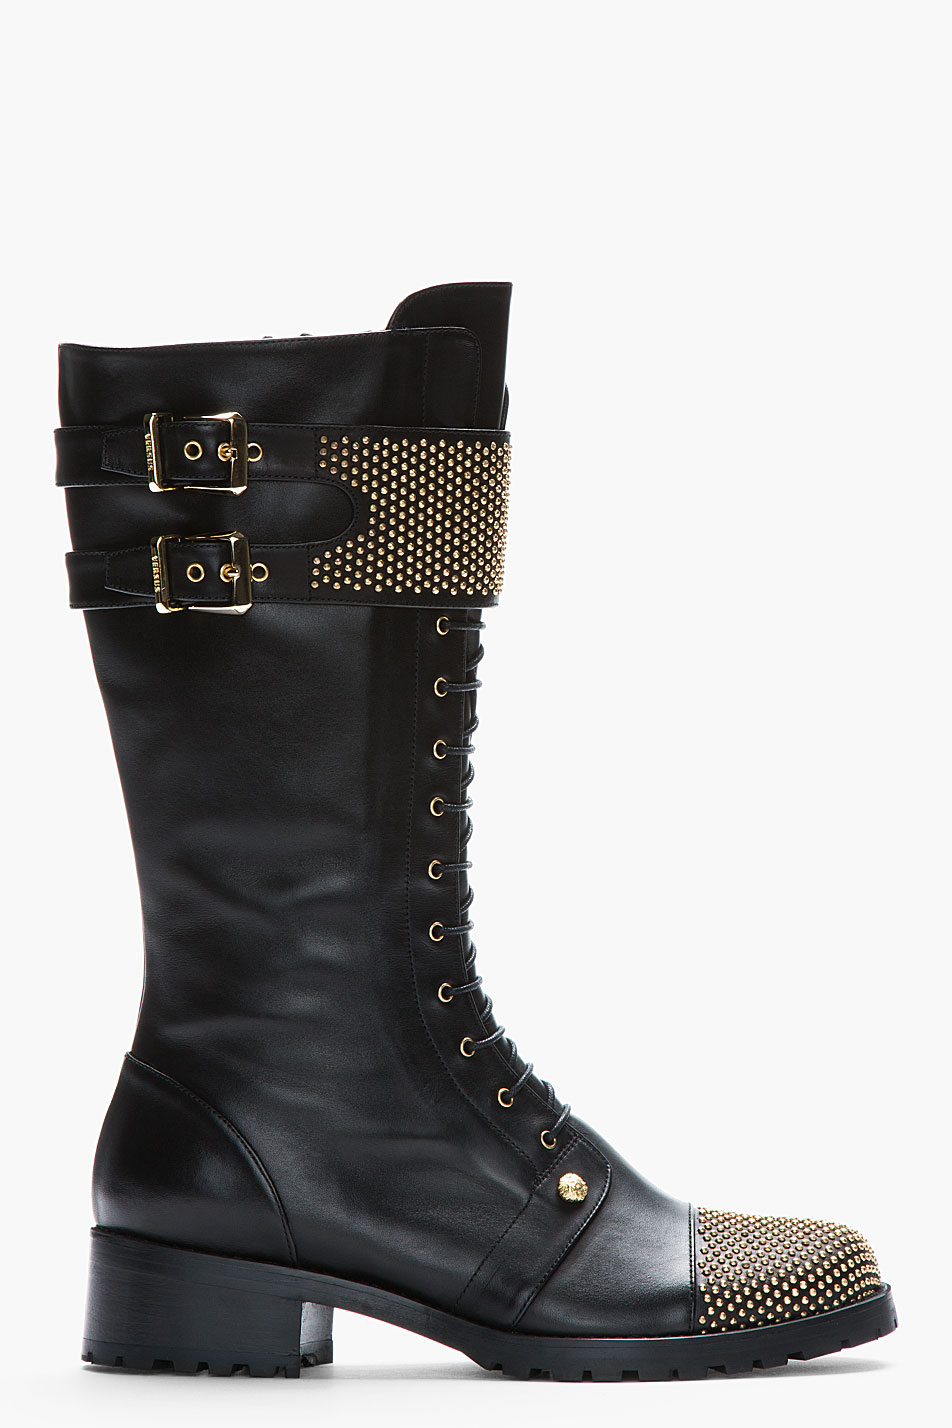 https://cdna.lystit.com/photos/2013/05/17/versus-black-black-leather-studded-combat-boots-product-1-9831562-719702480.jpeg